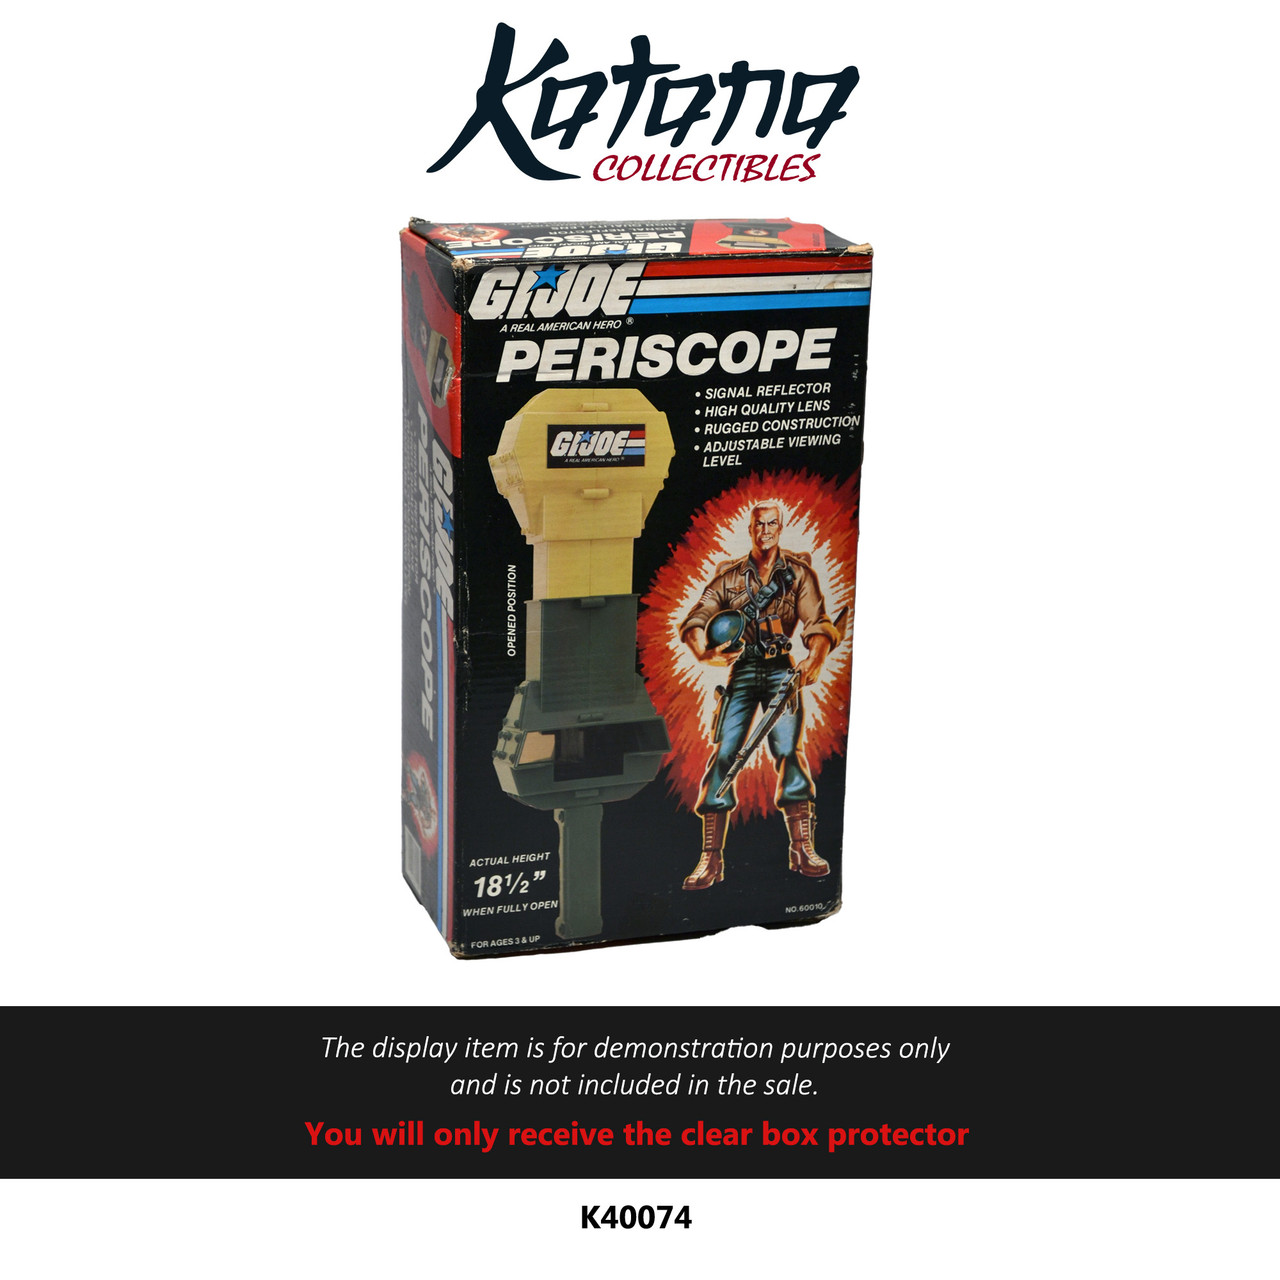 Katana Collectibles Protector For GI Joe Periscope